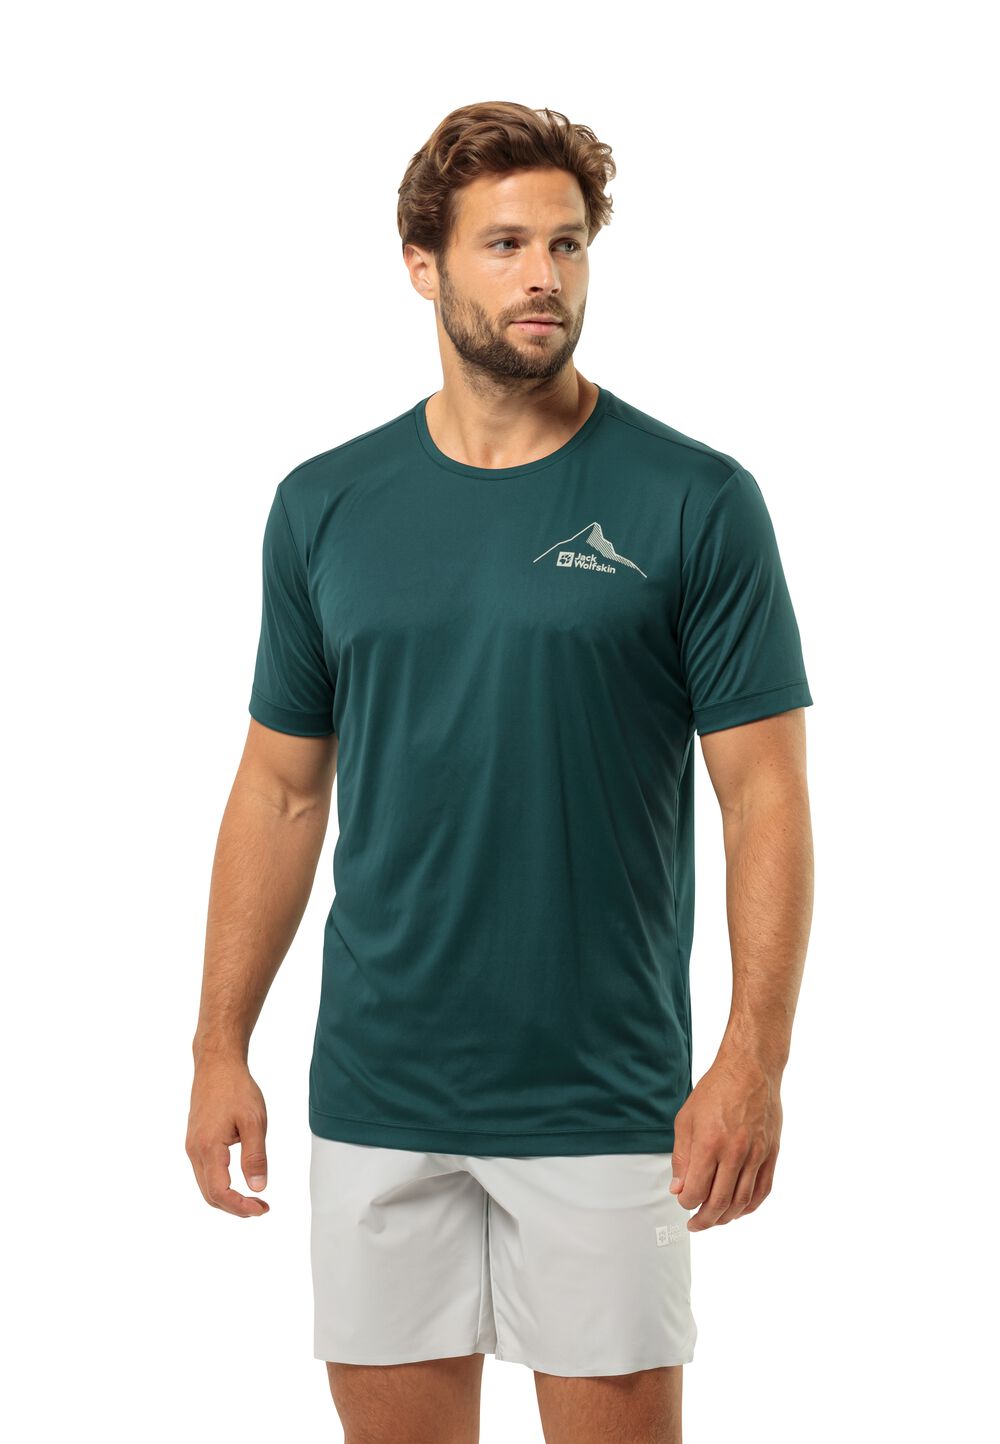 Jack Wolfskin Peak Graphic T-Shirt Men Functioneel shirt Heren 3XL emerald